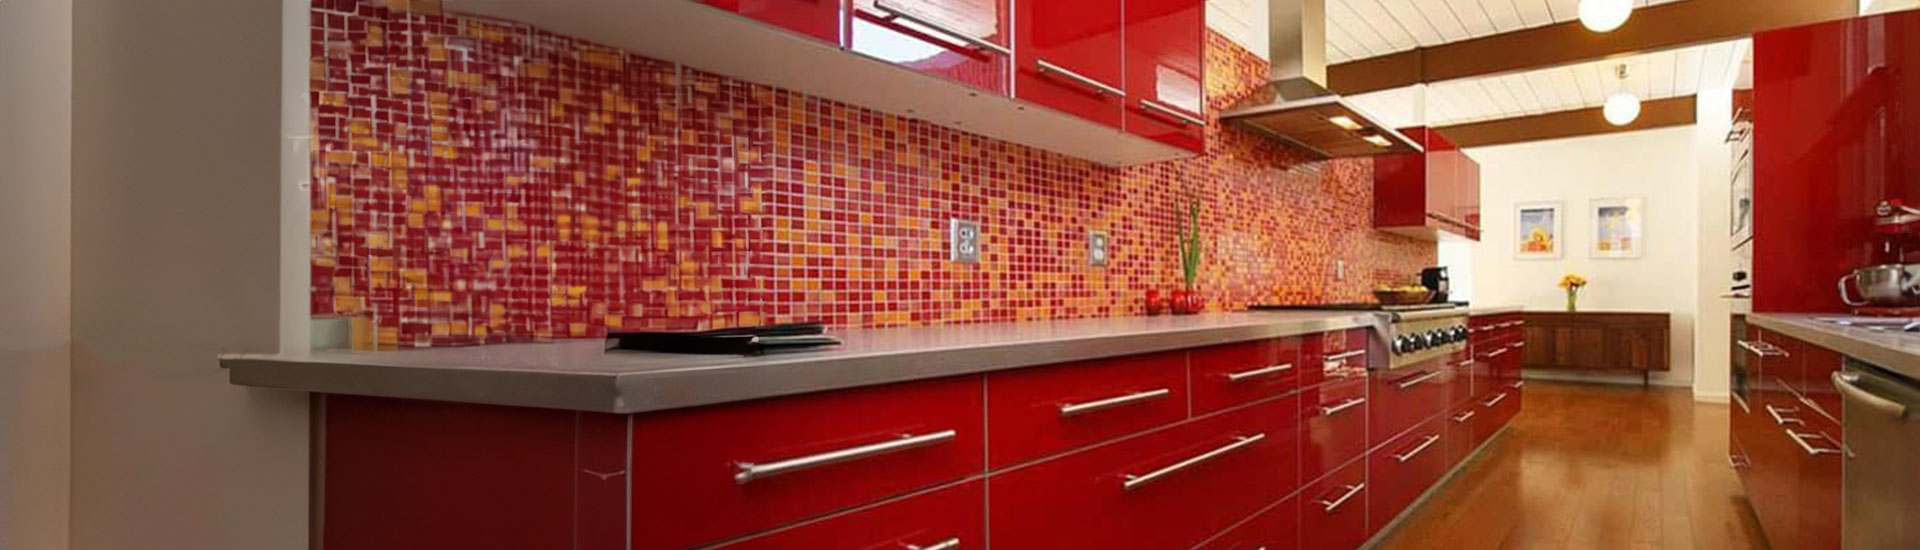 Red Kitchen Cabinet Wraps